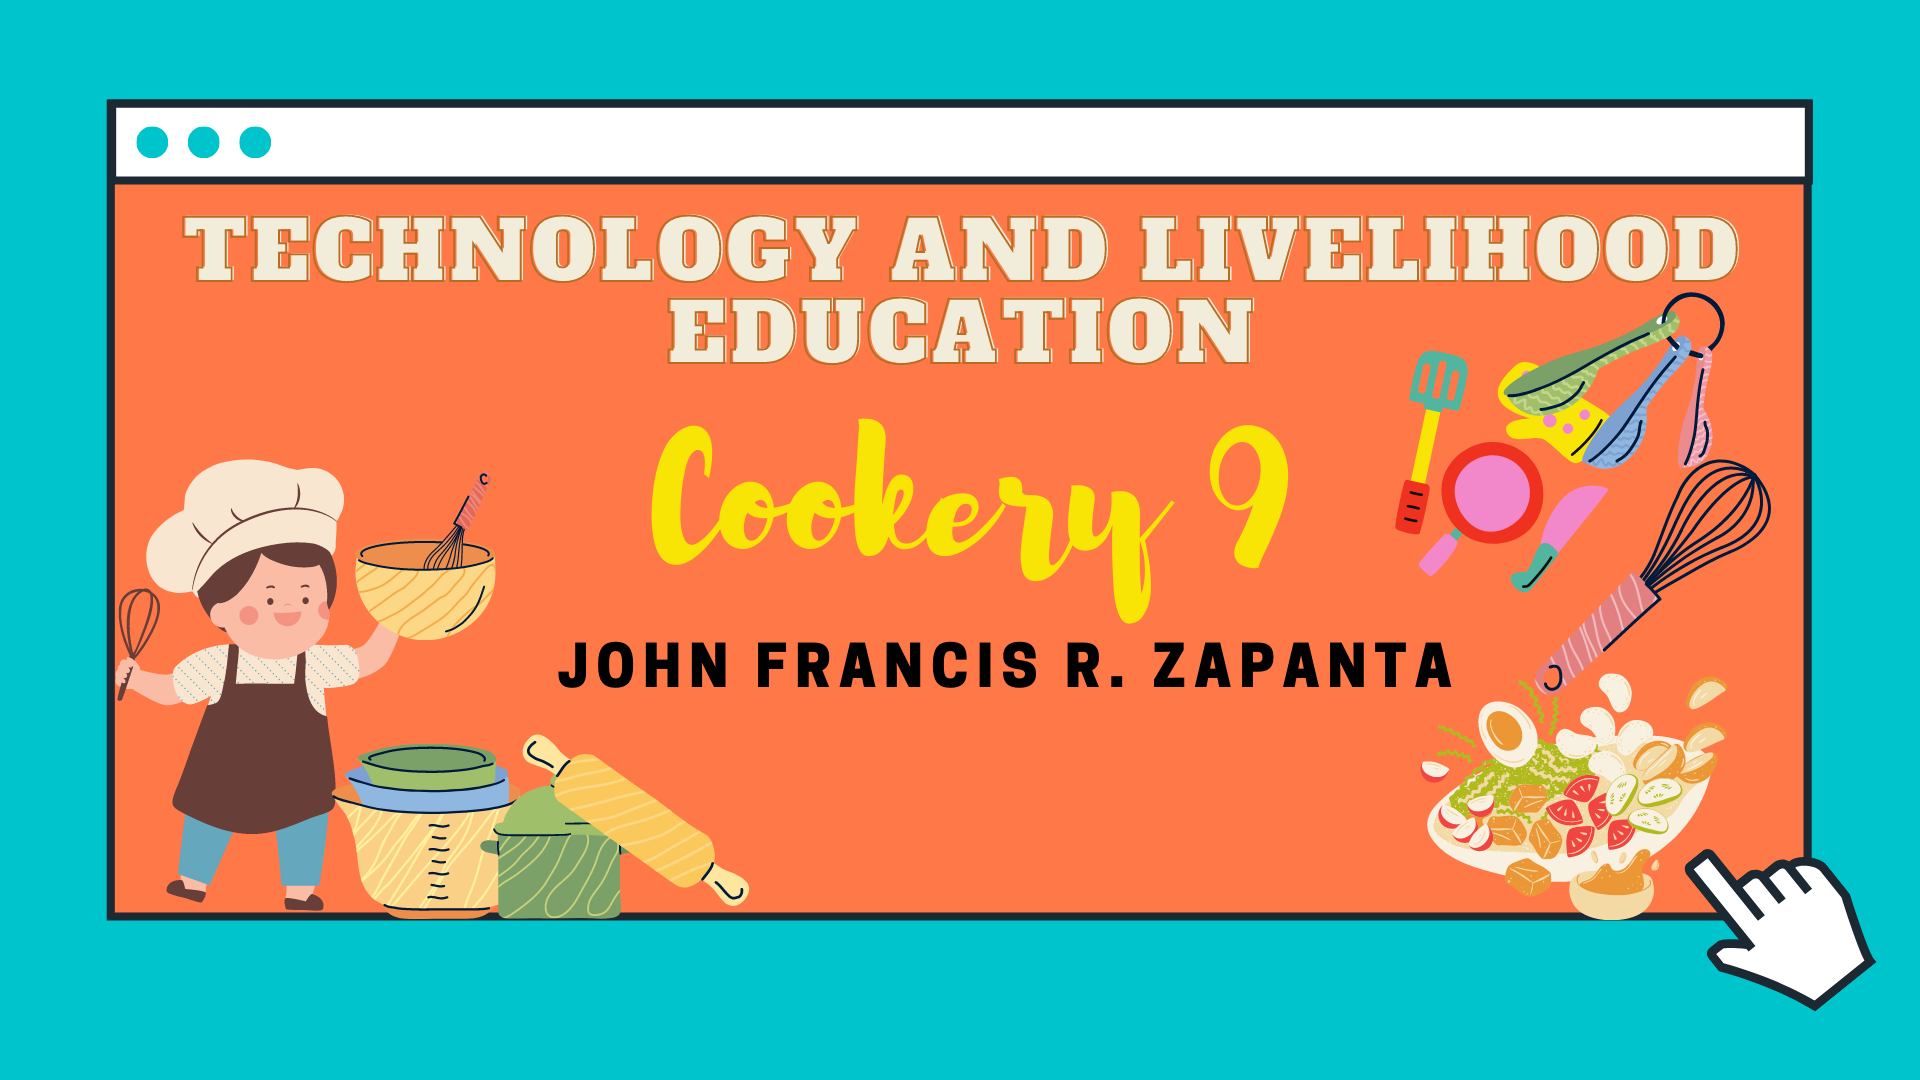 Technology and Livelihood Education (Cookery 9)